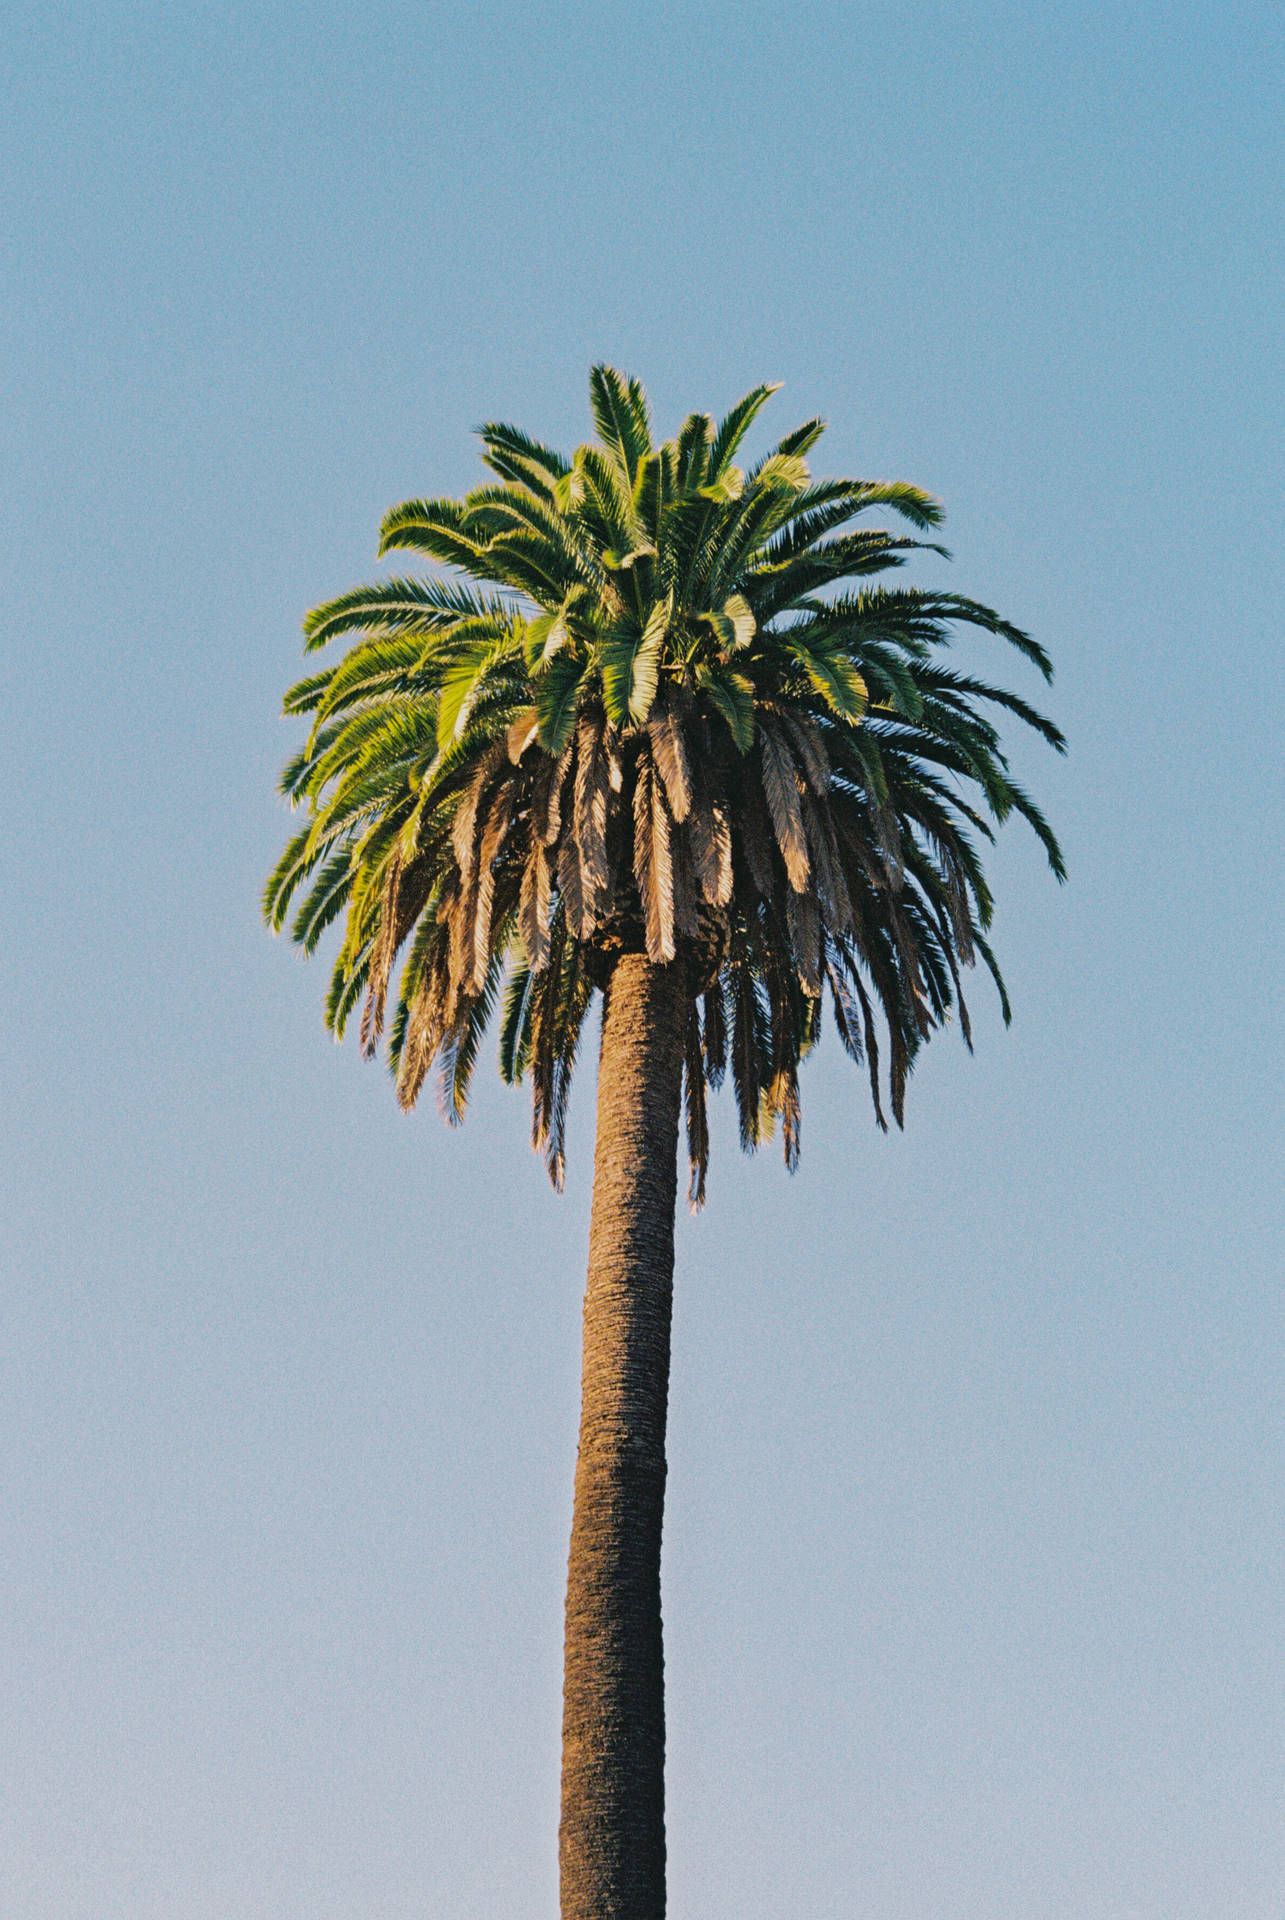 Majestic Canary Palm Tree in Full Splendor Wallpaper